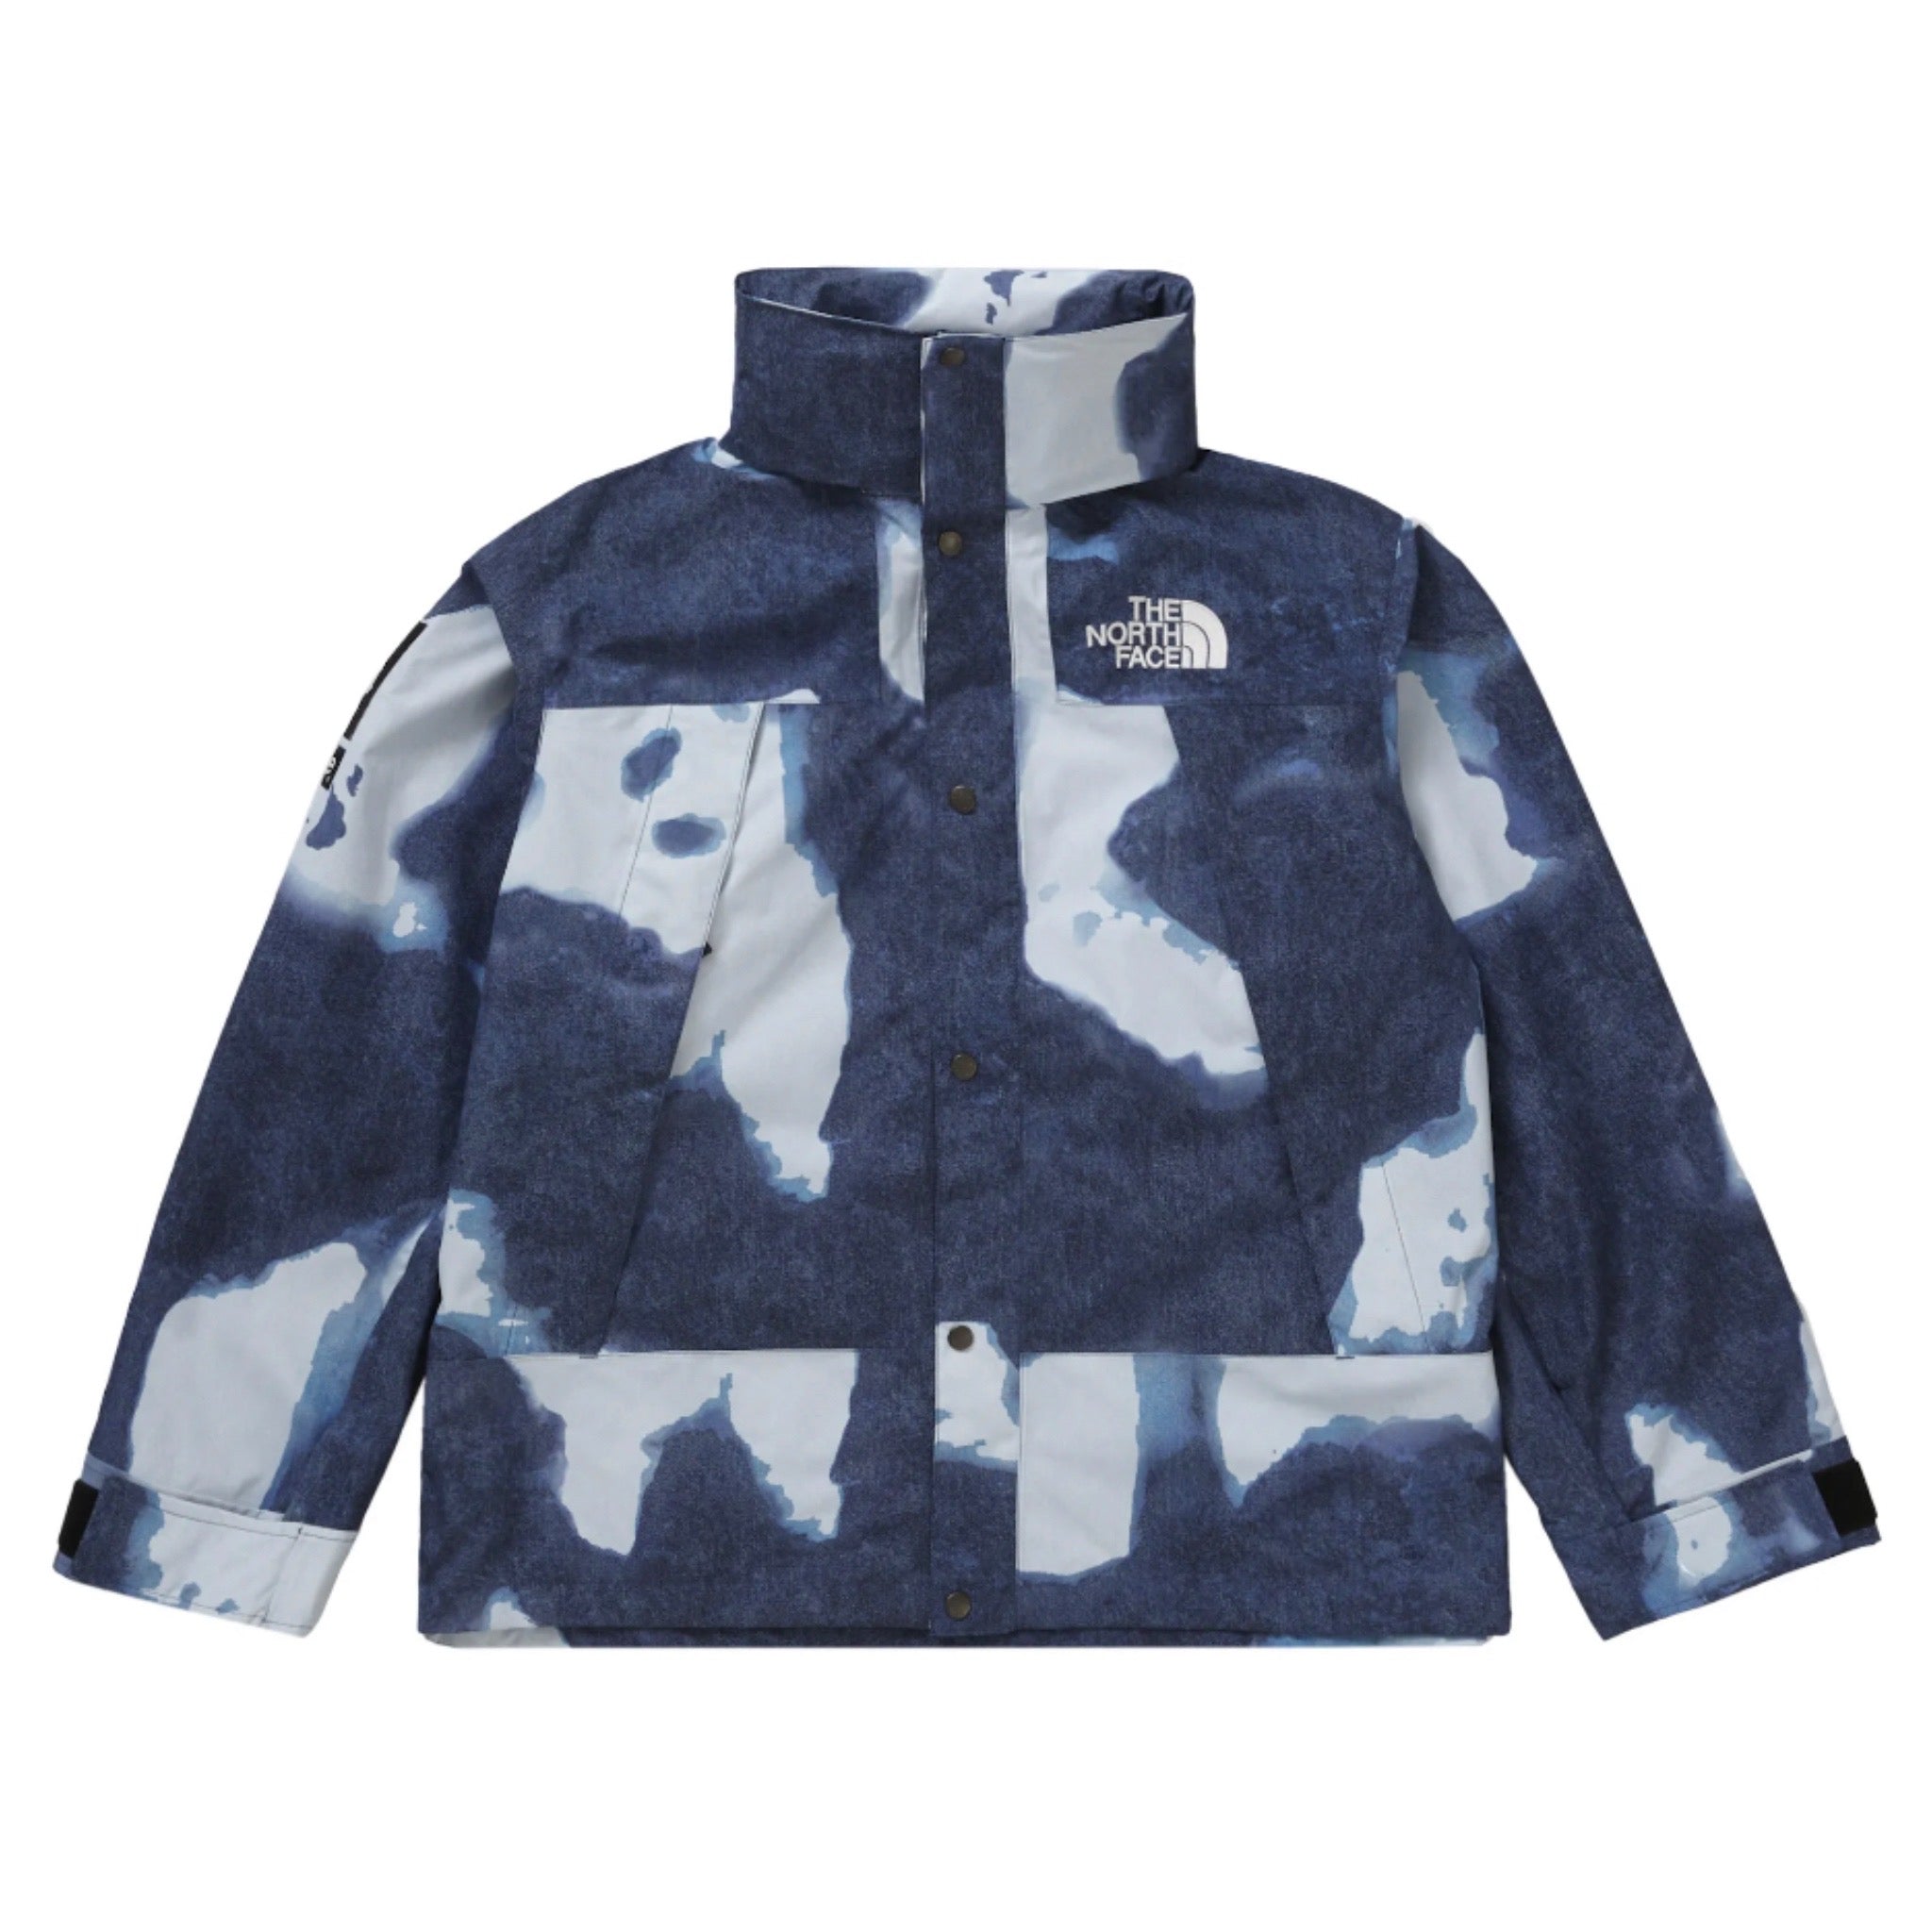 Supreme x The North Face Bleached Denim Print Mountain Jacket - Indigo Denim Jacket